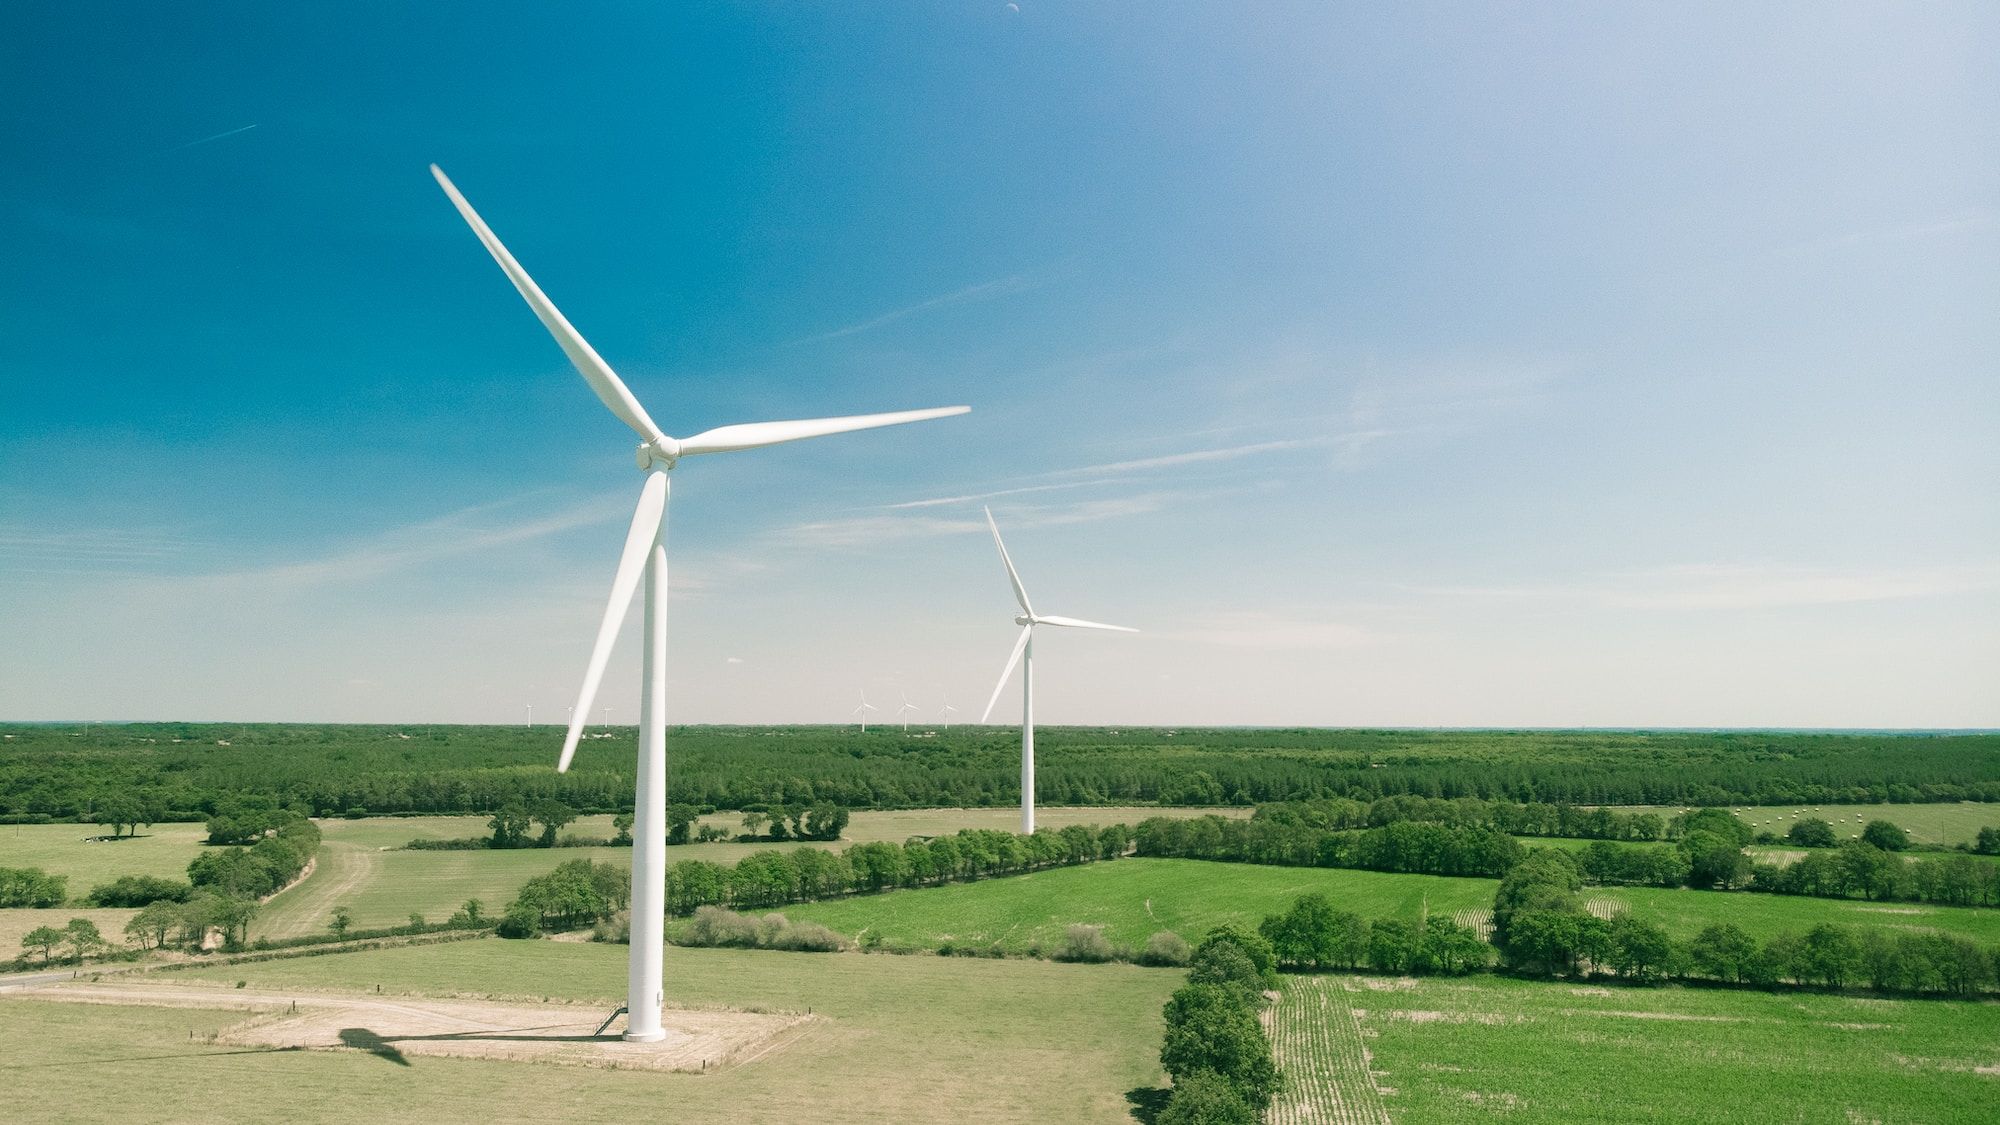 Two wind turbines in green fields with blue sky